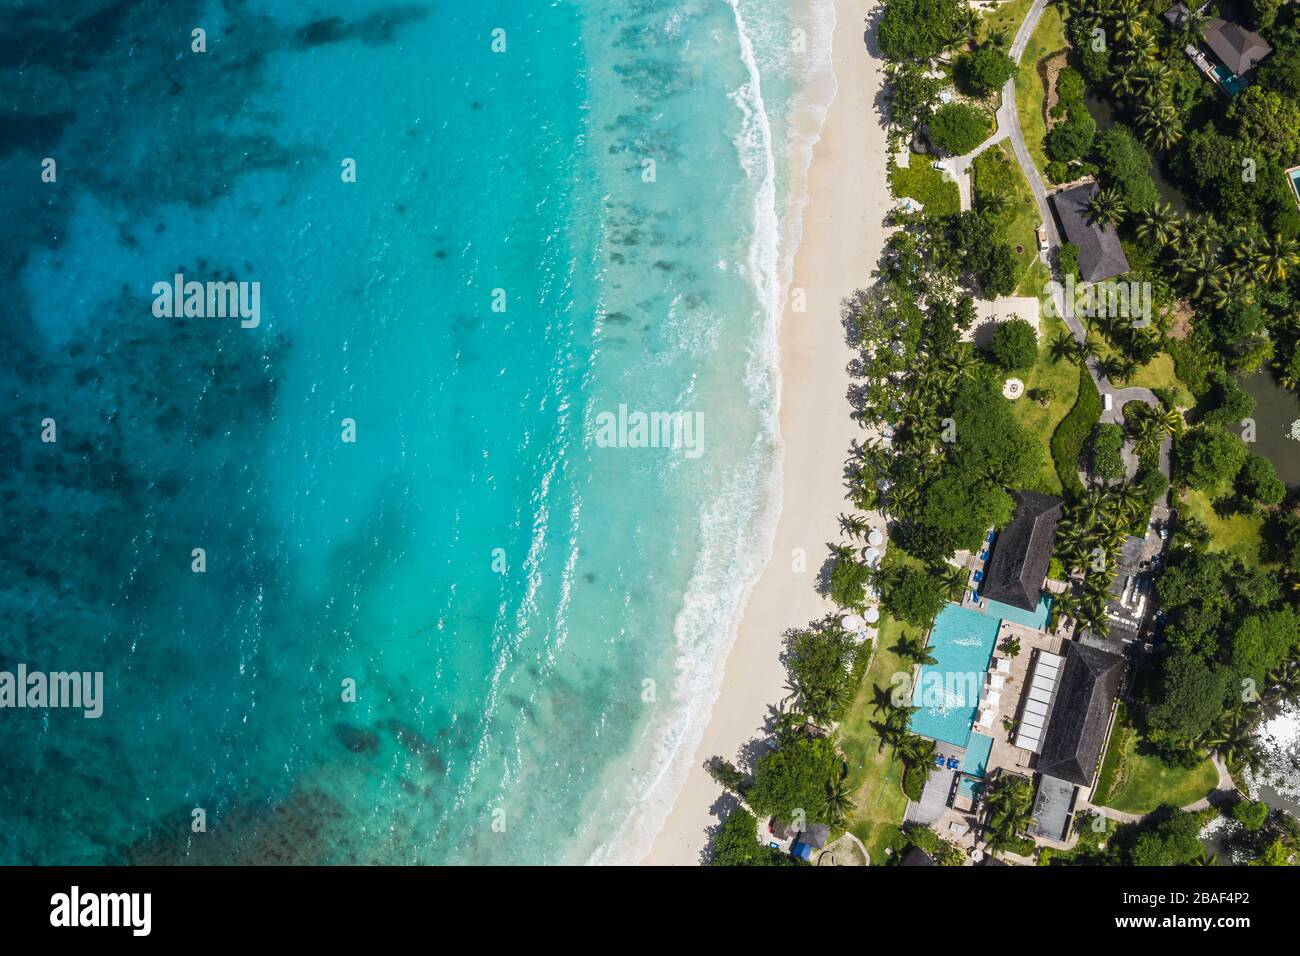 Seychelles Mahe Island drone beach view of Anse Petit Stock Photo